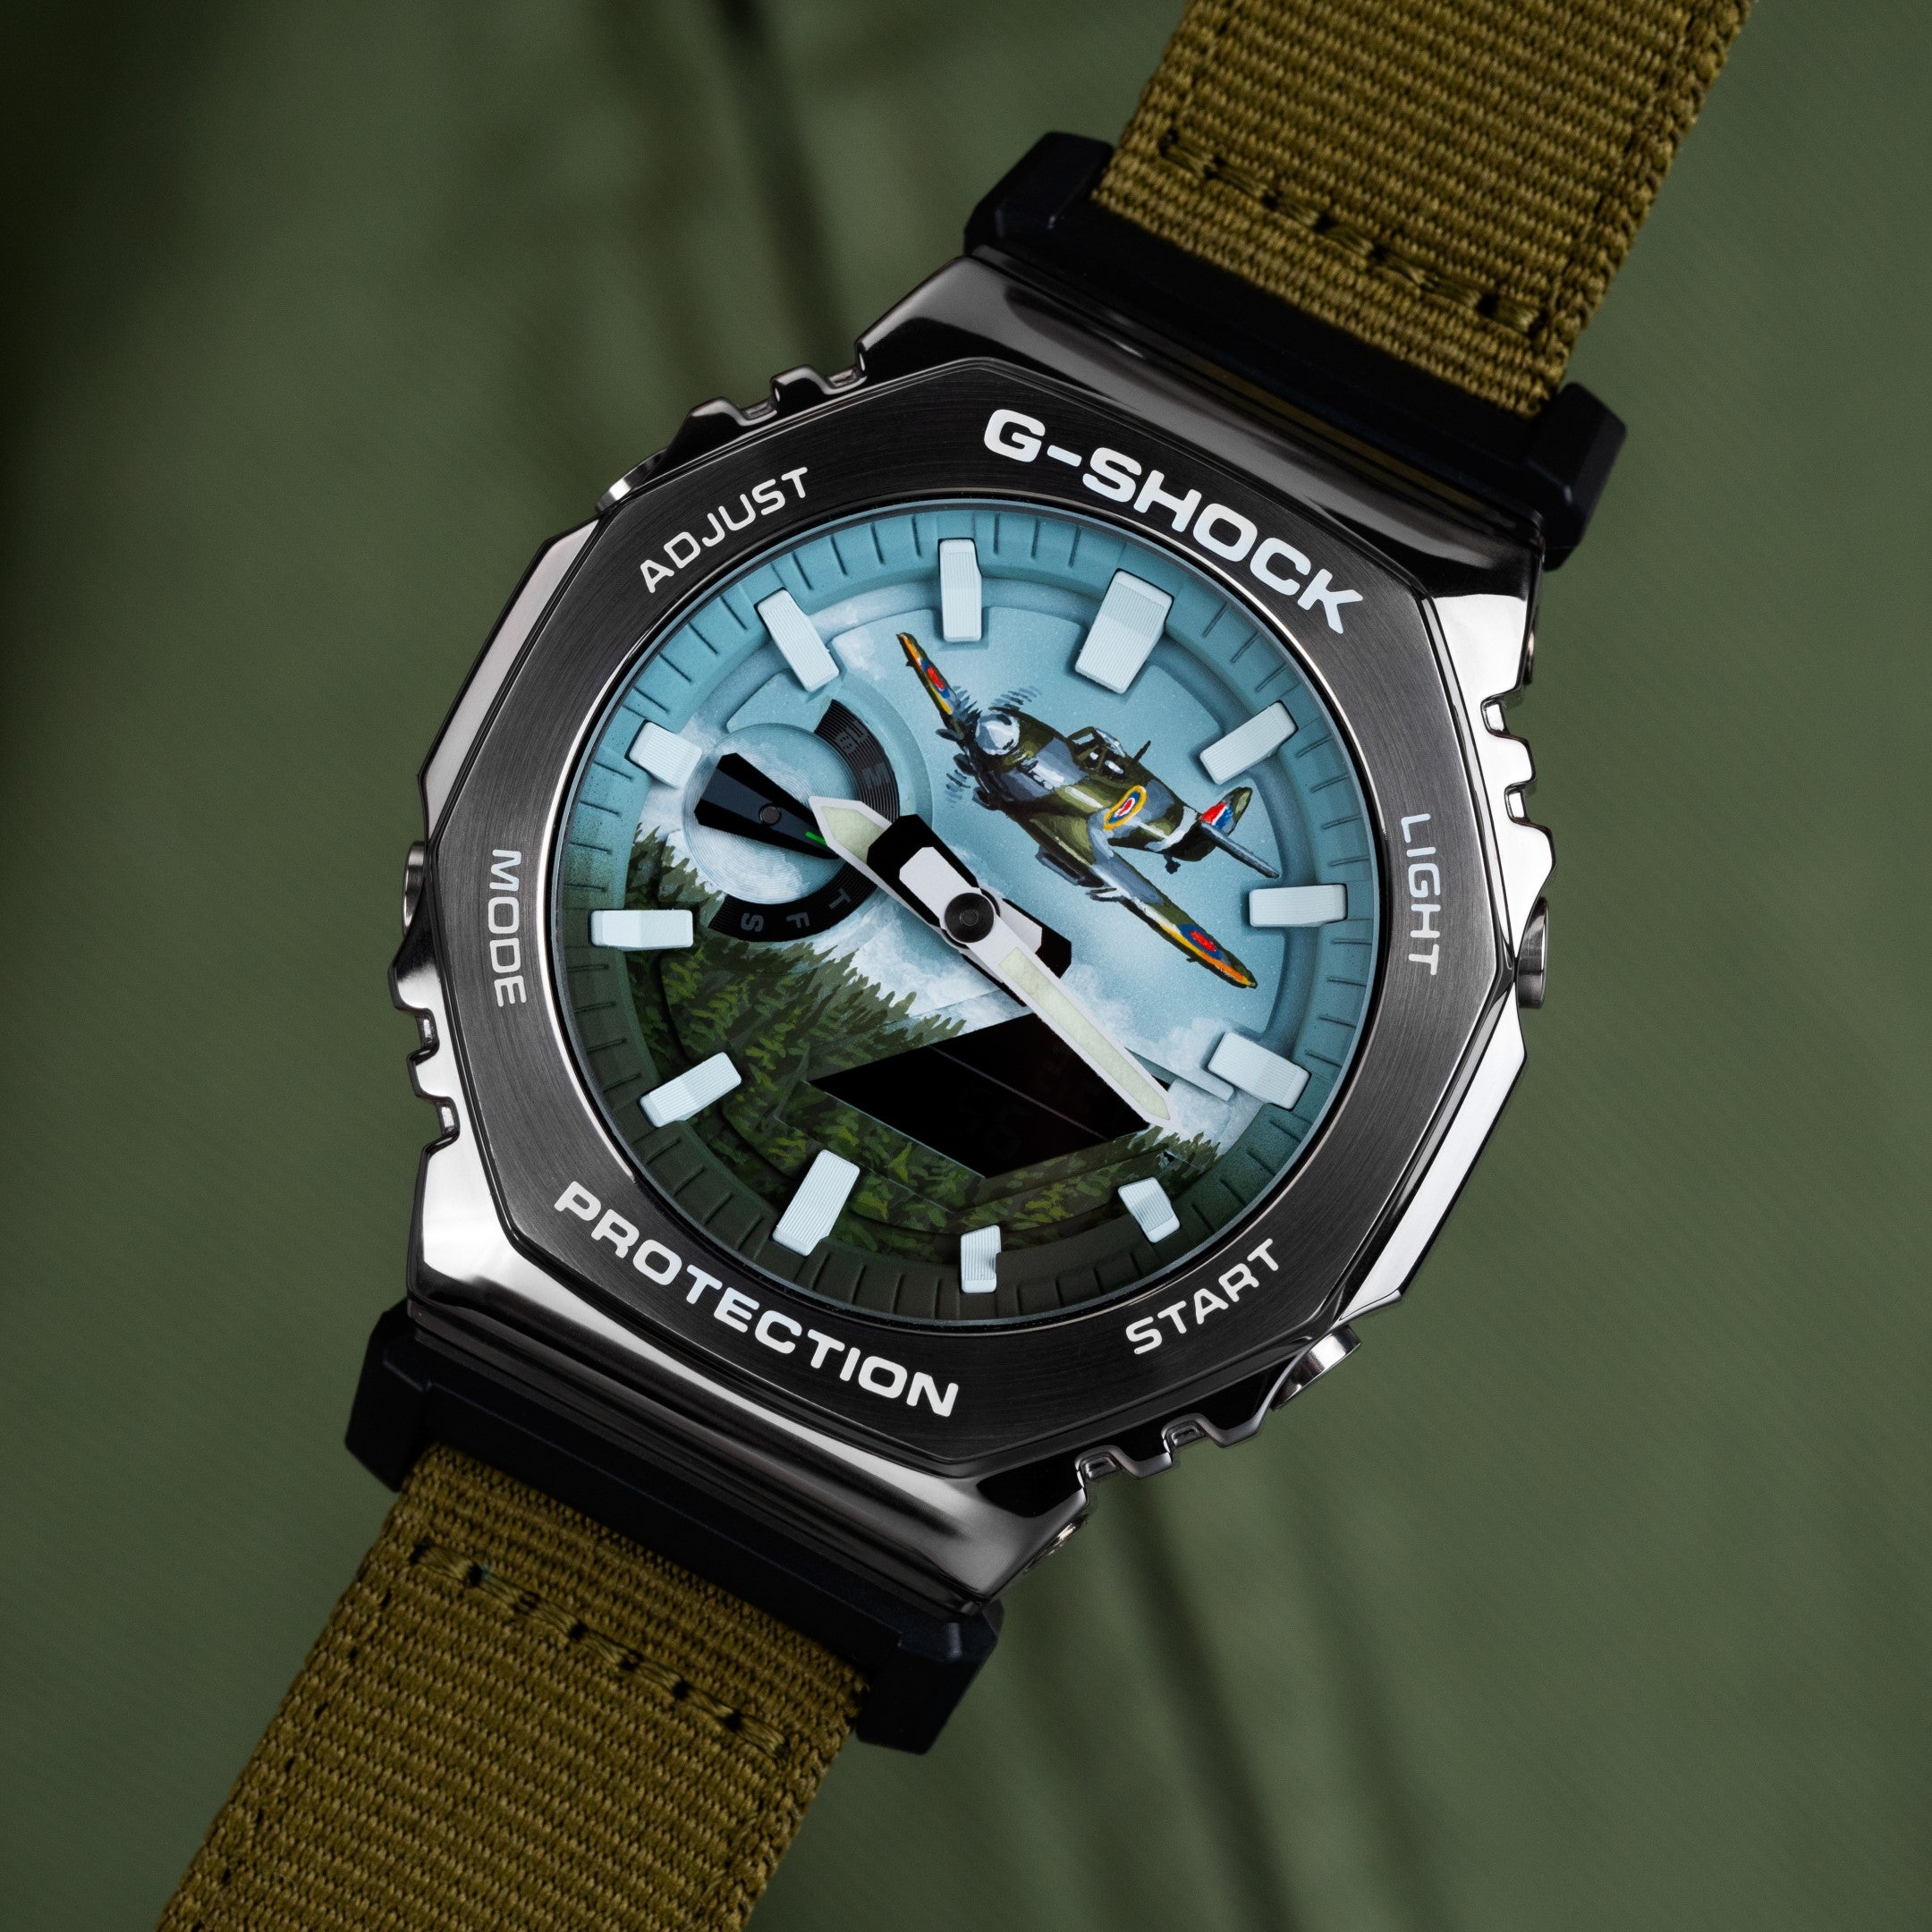 G-Shock CasiOak Spitfire edition embodying Spitfire spirit with robust G-Shock durability